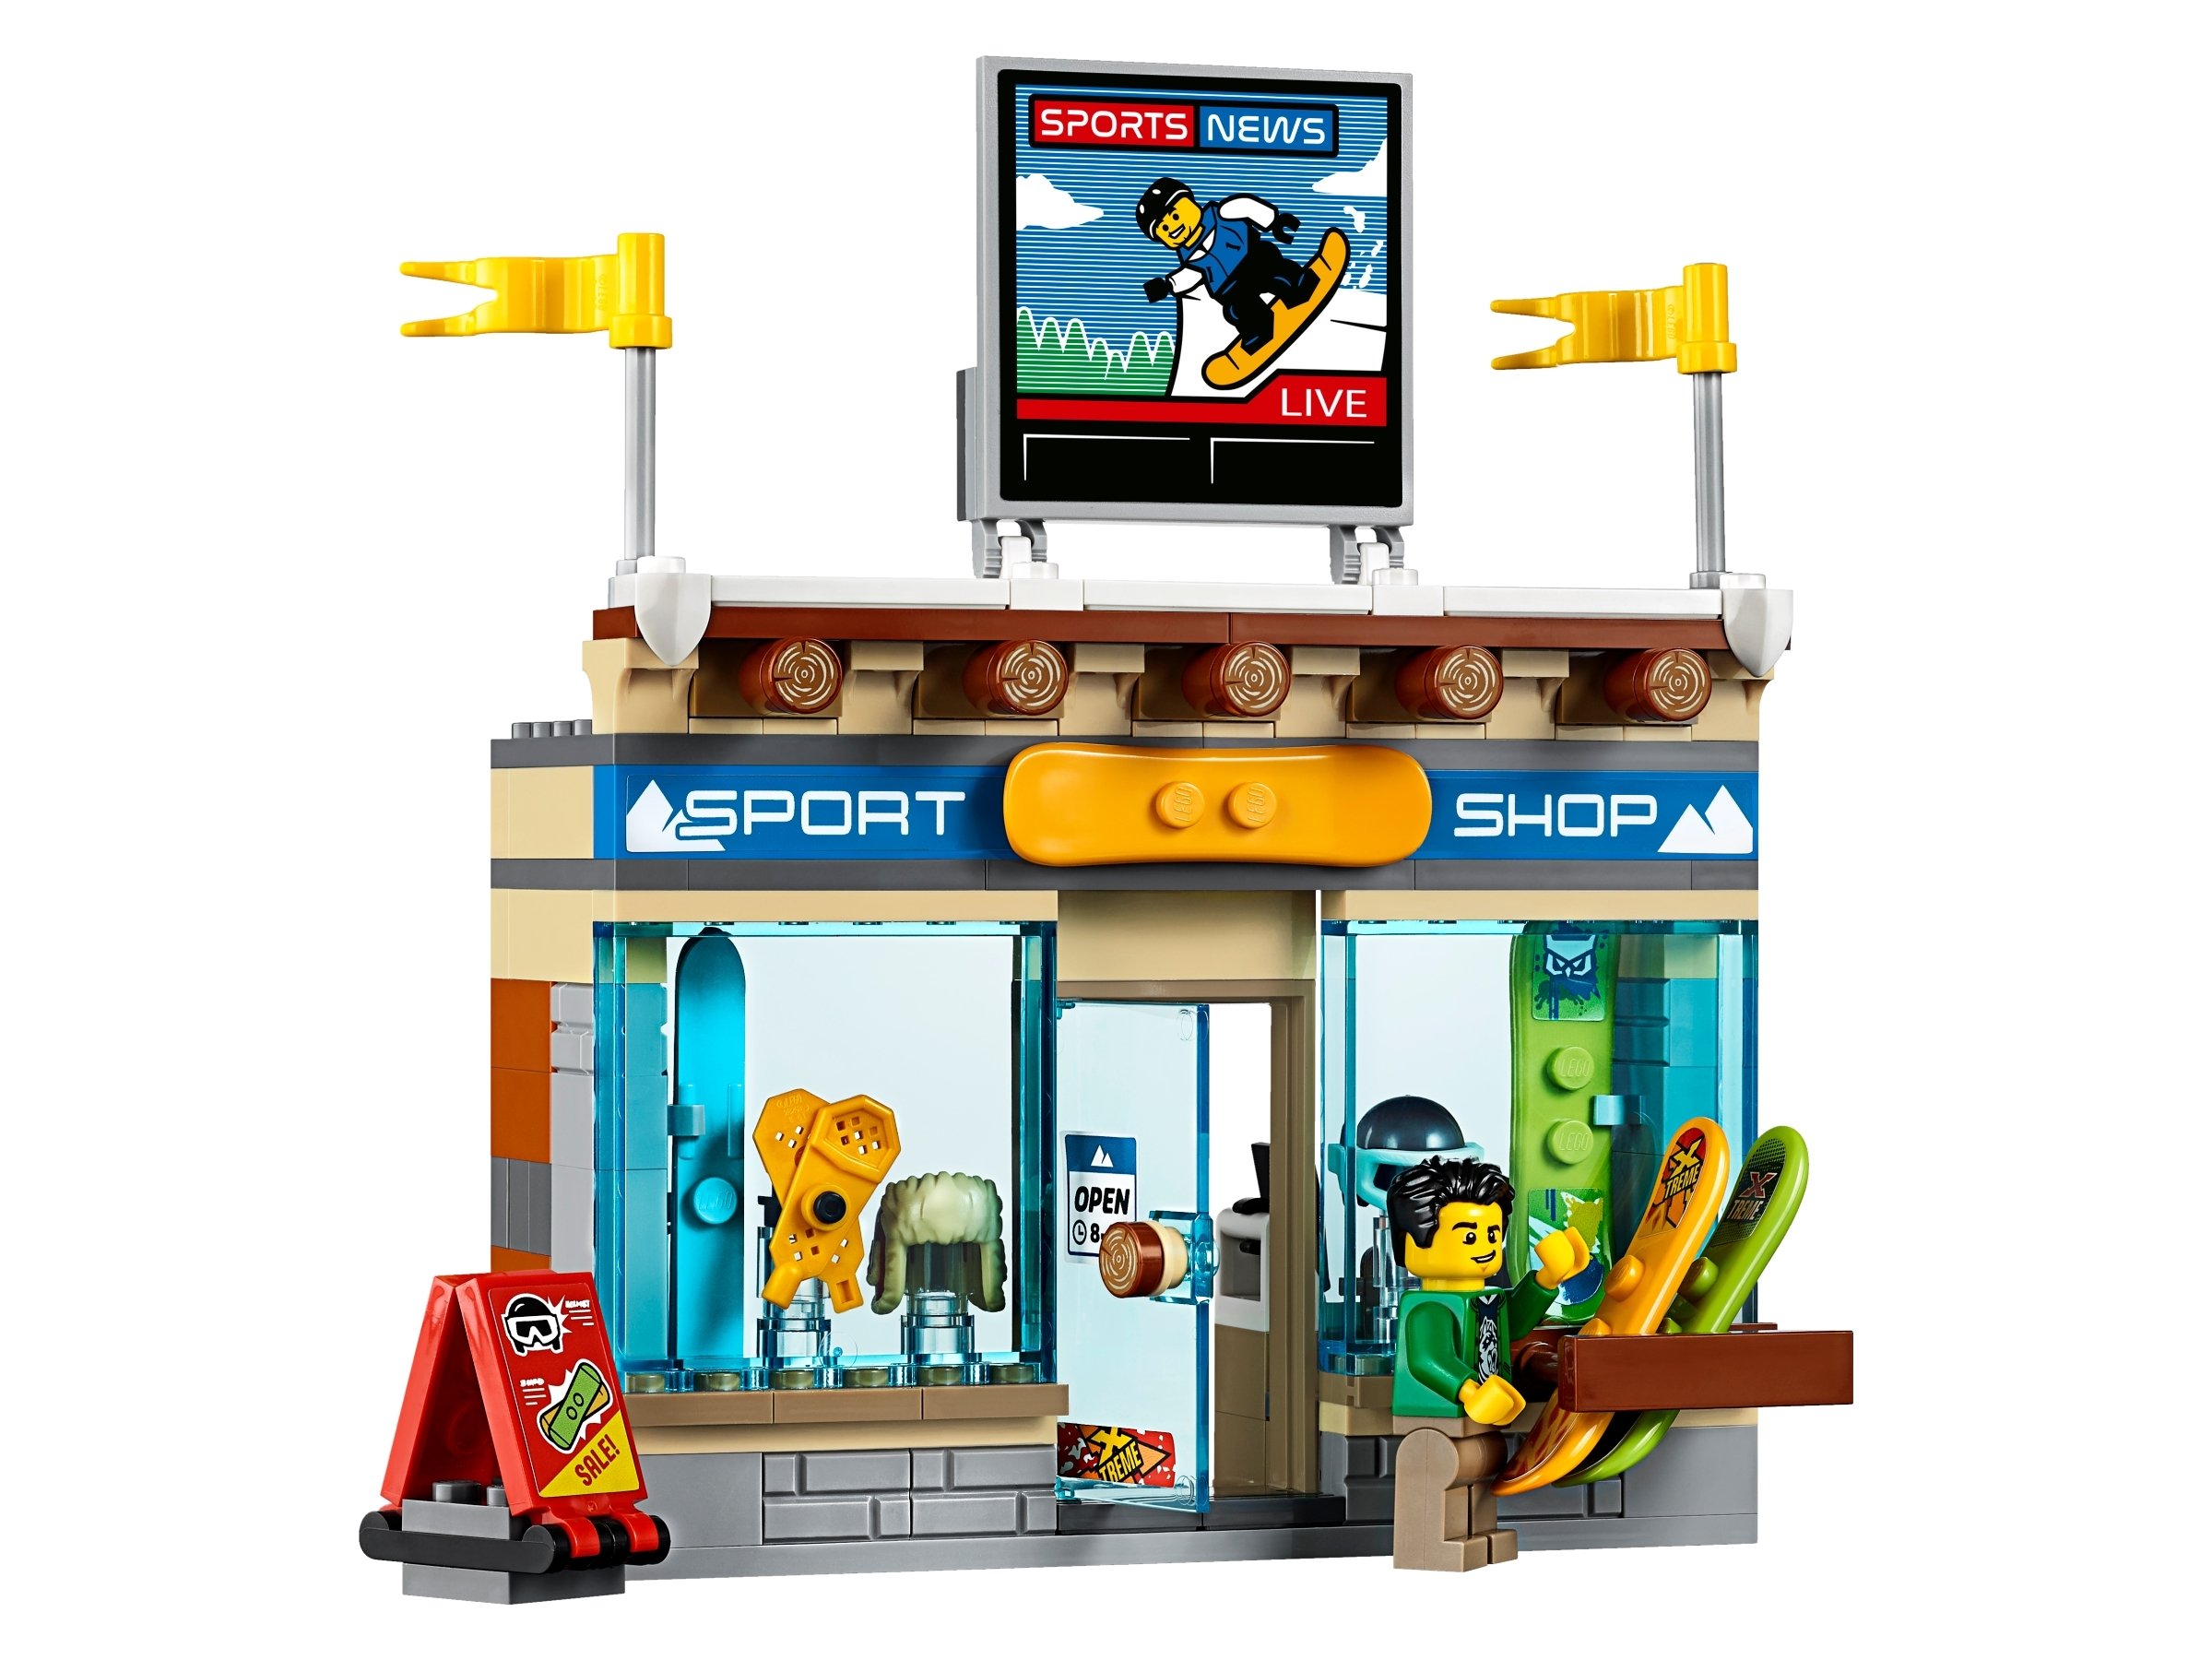 Ski Resort 60203 | City | Buy online at the Official LEGO® Shop US